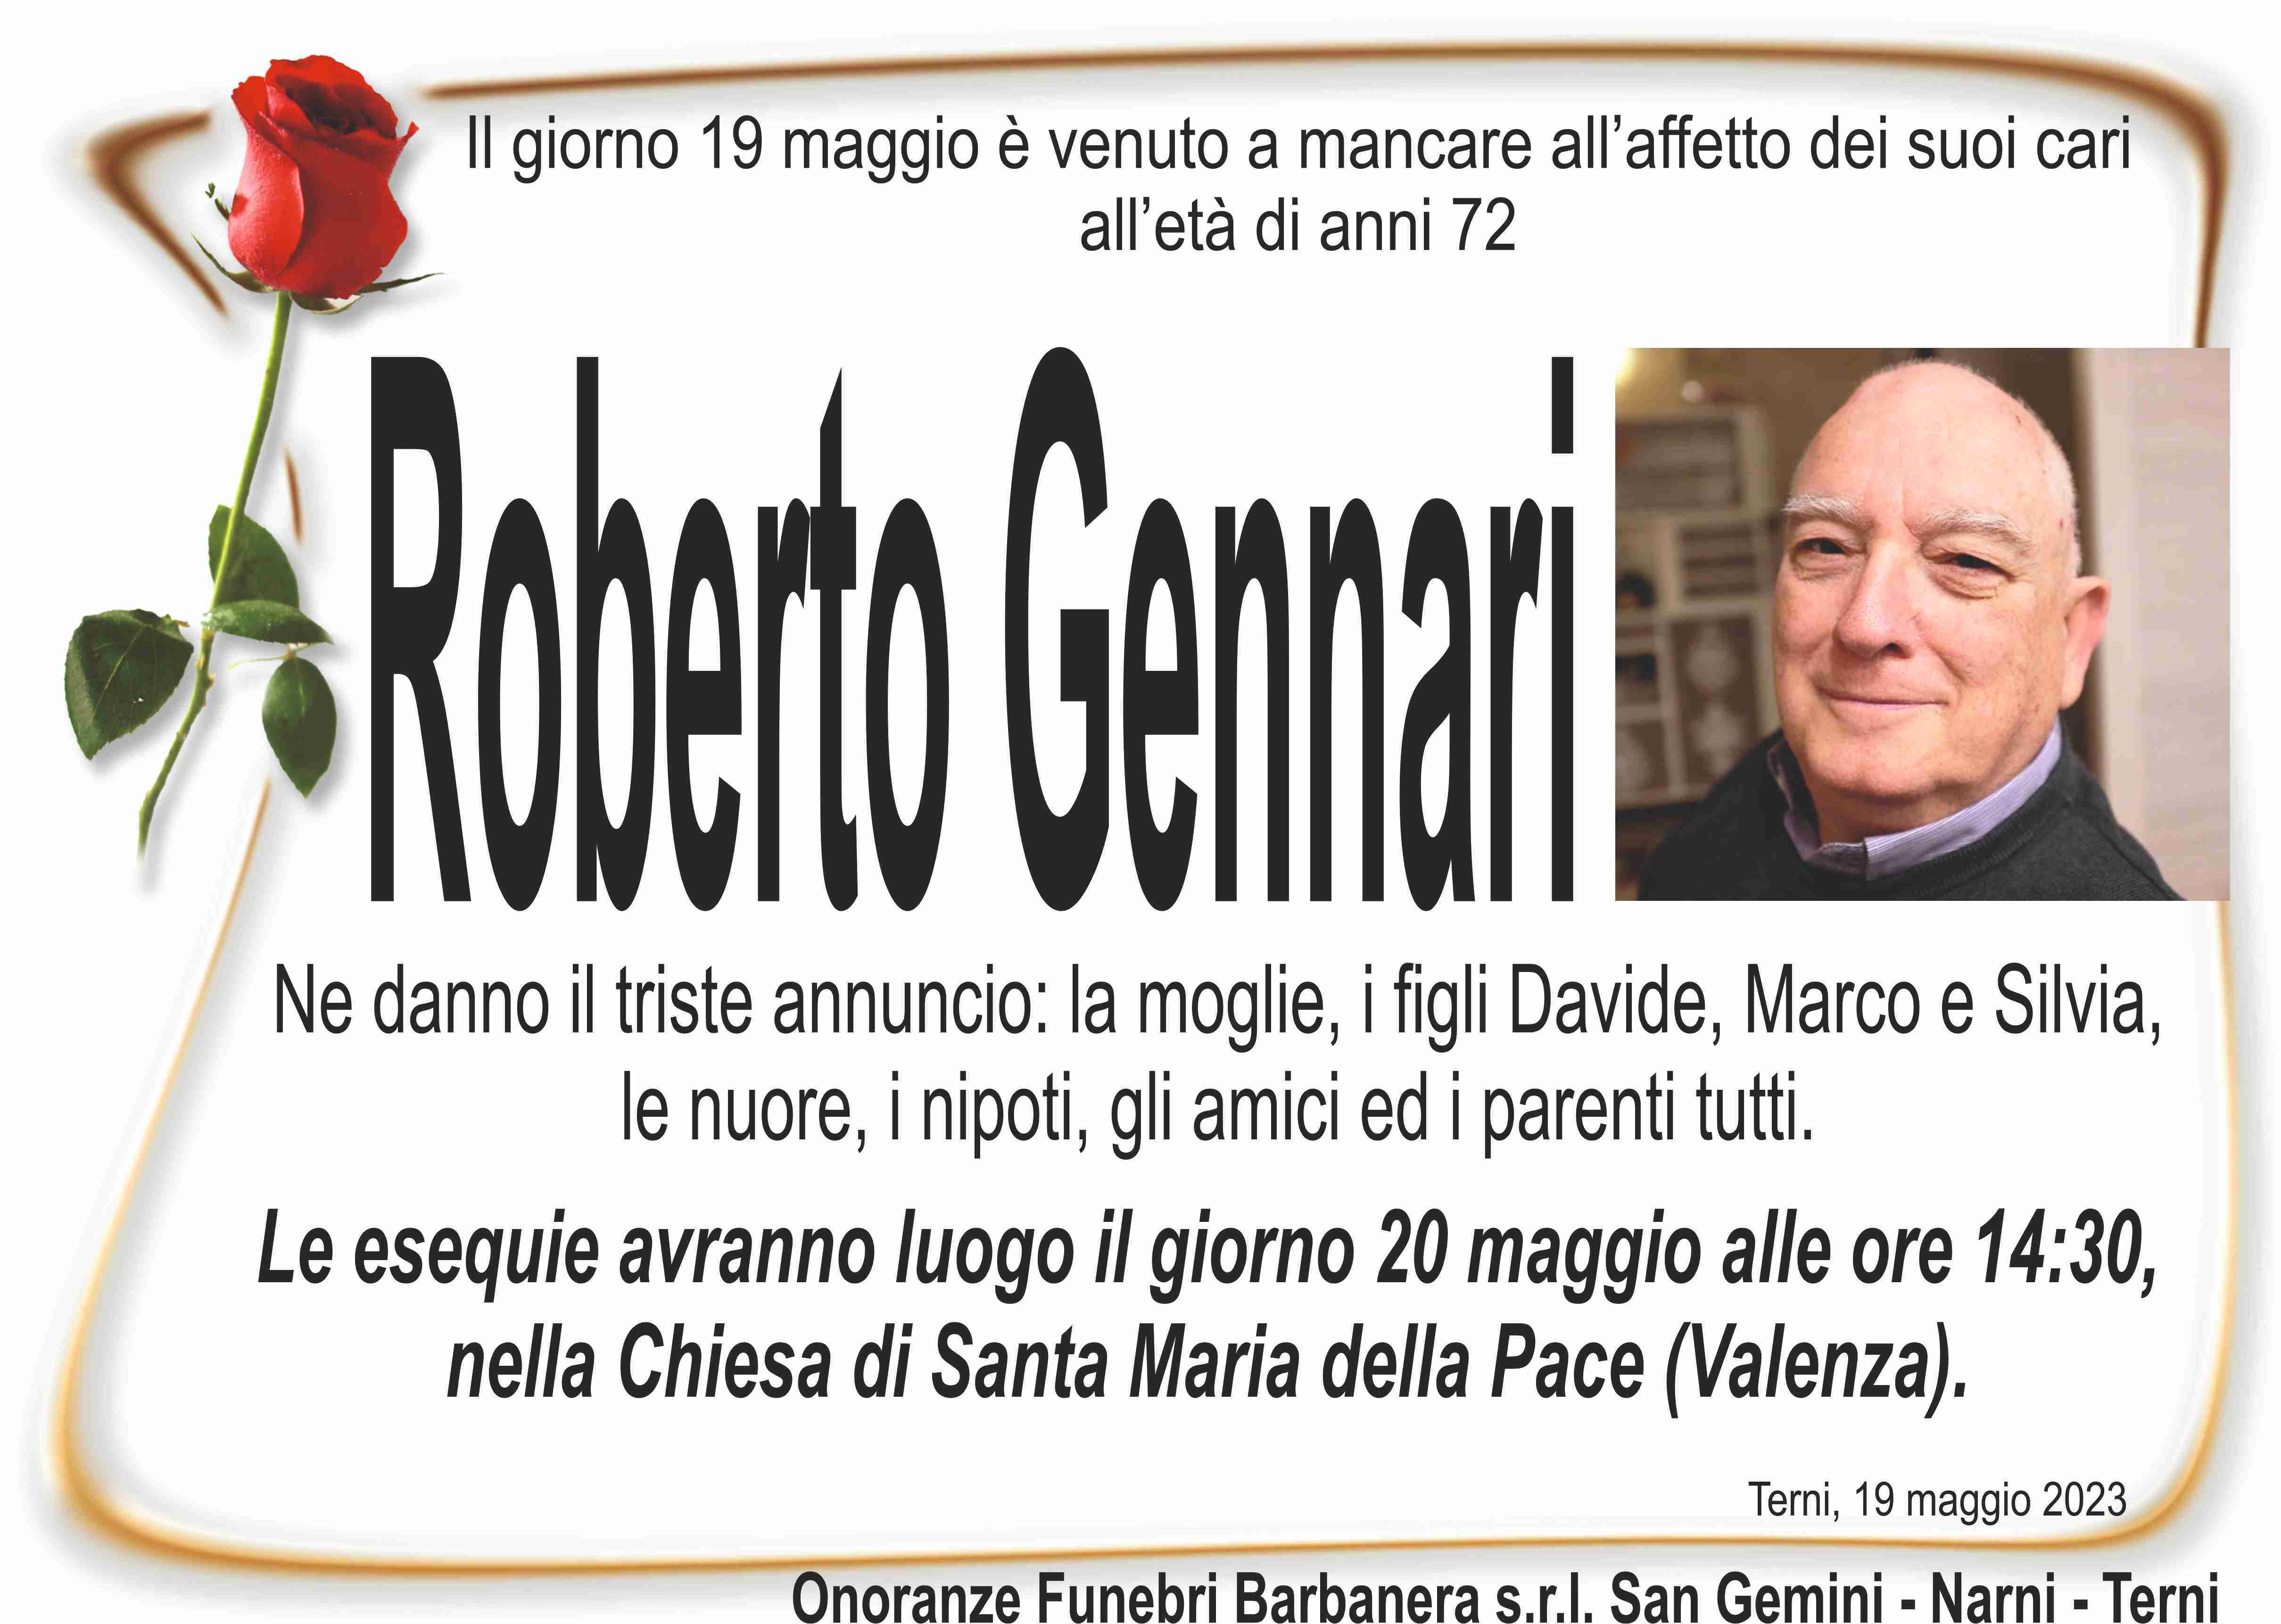 Roberto Gennari